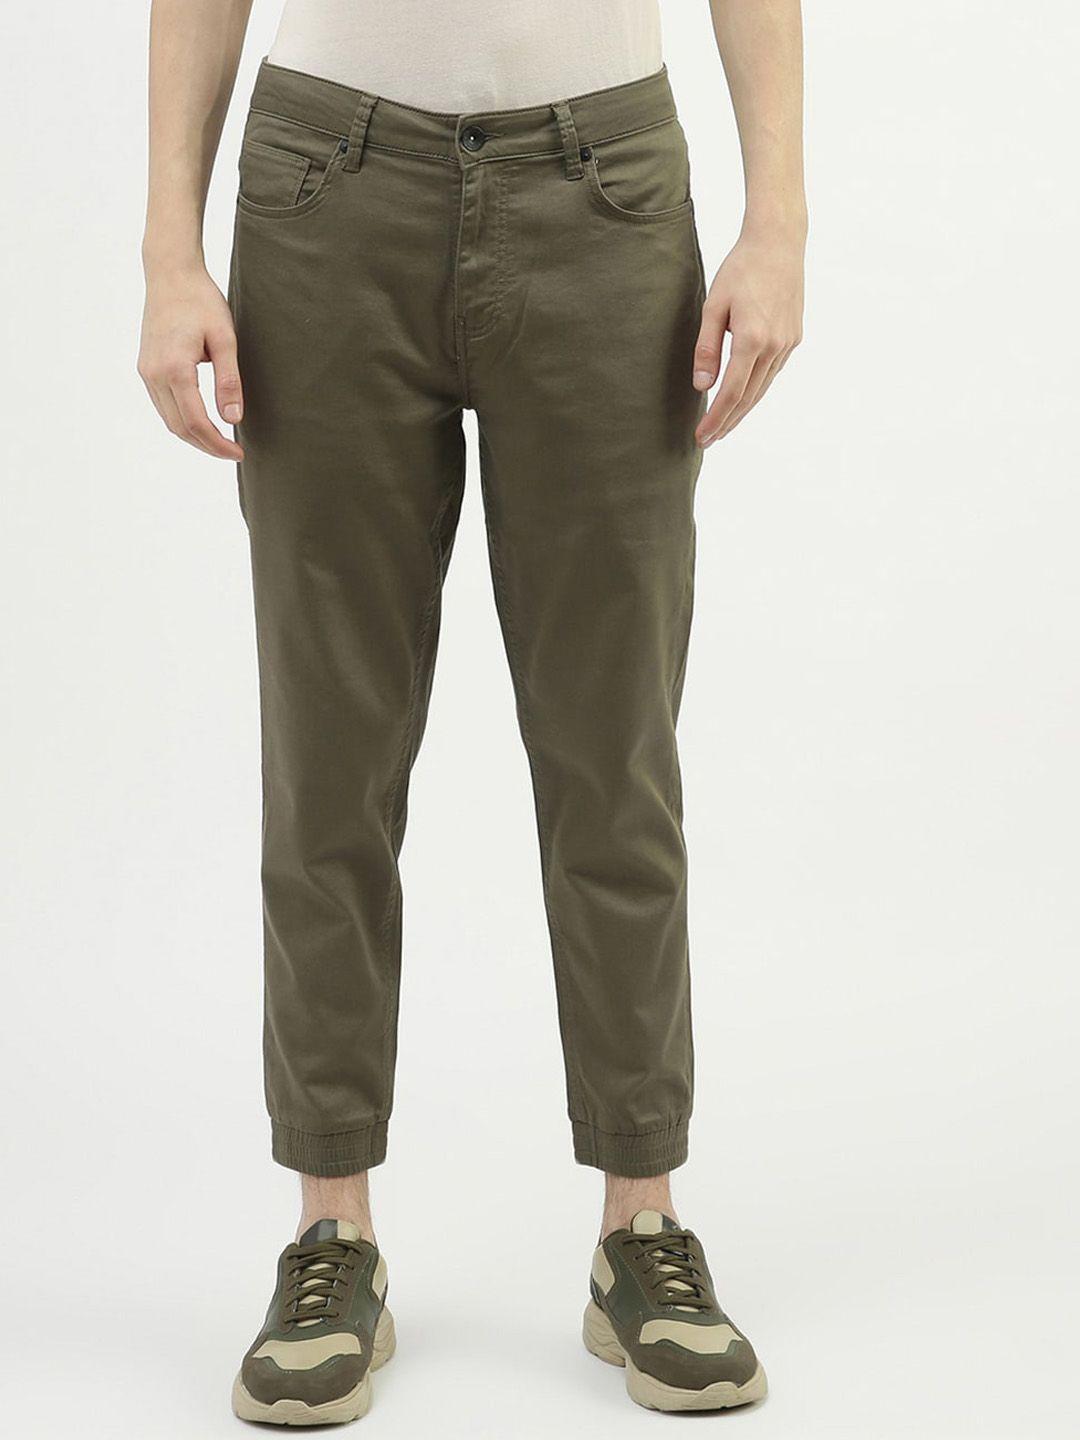 united-colors-of-benetton-men-cotton-trousers